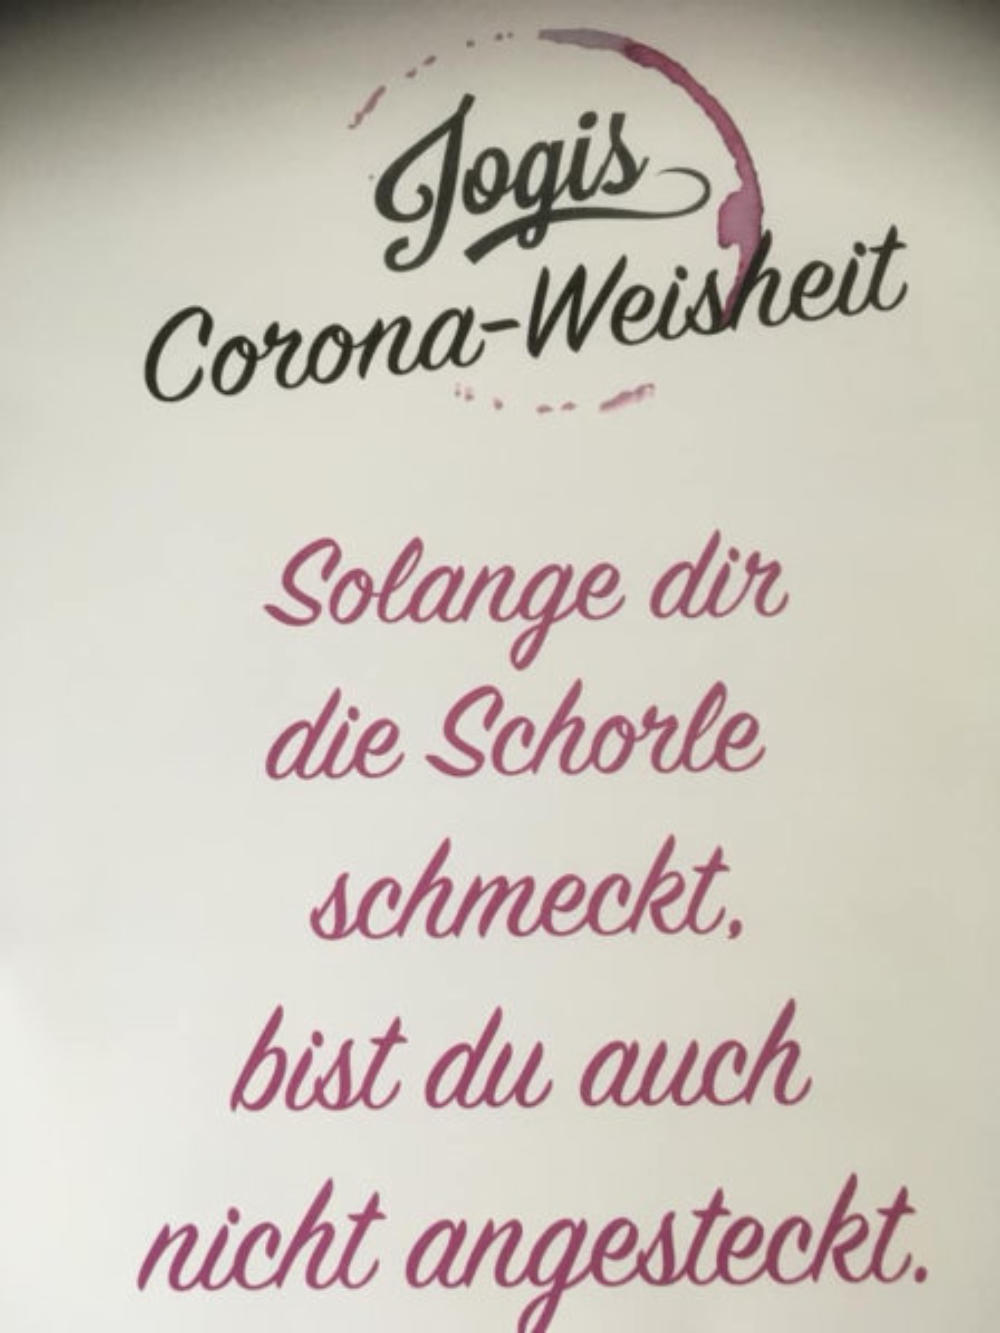 Jogis-Weinwelt-Corona-Weisheit